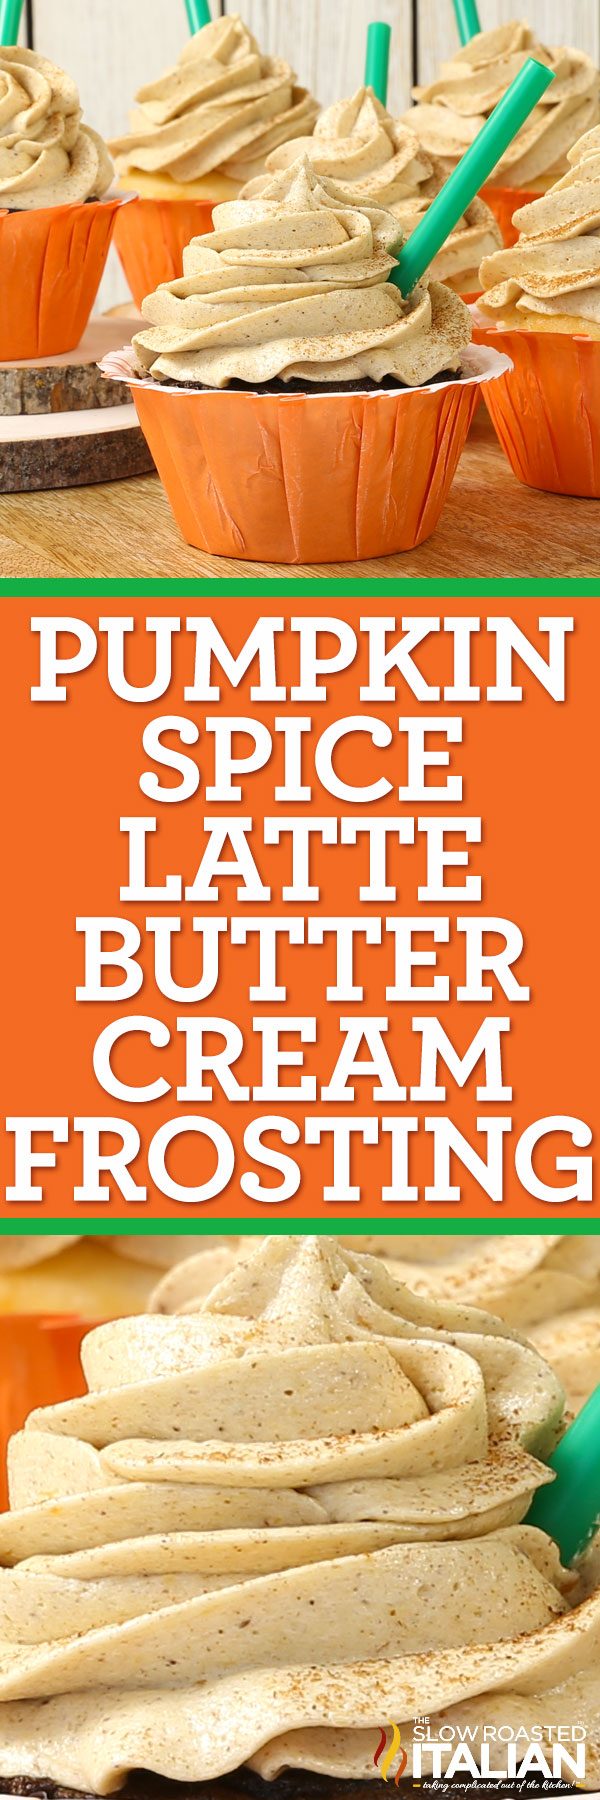 pumpkin spice latte buttercream frosting -pin